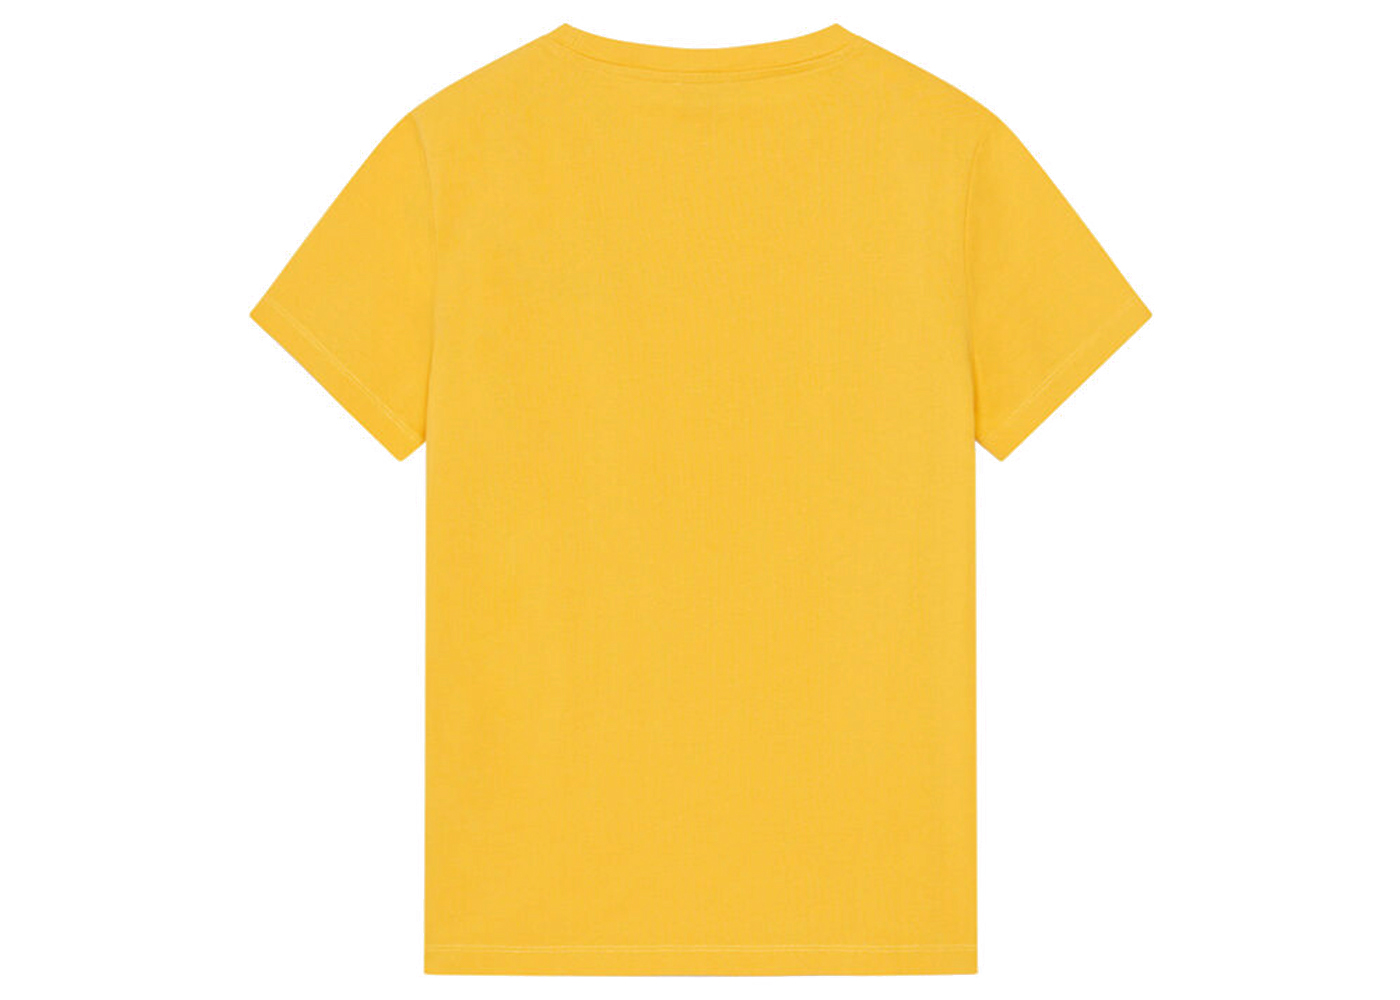 KENZO x Nigo Womens Boke Flower Crest T-Shirt Golden Yellow